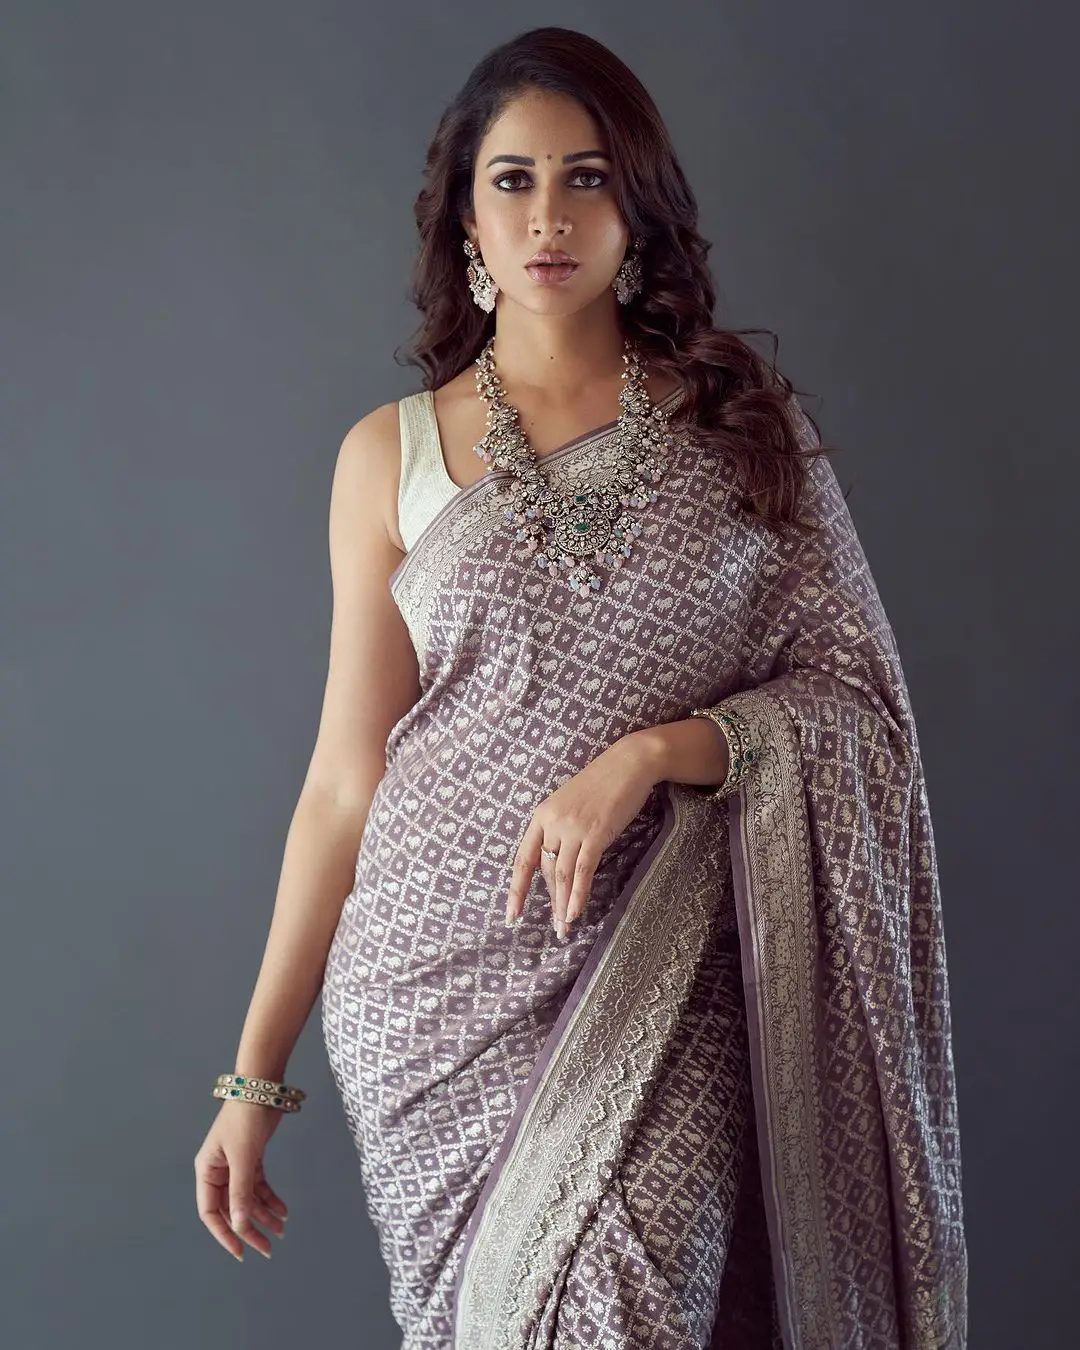 Lavanya tripathi Gorgeous looks in Saree 